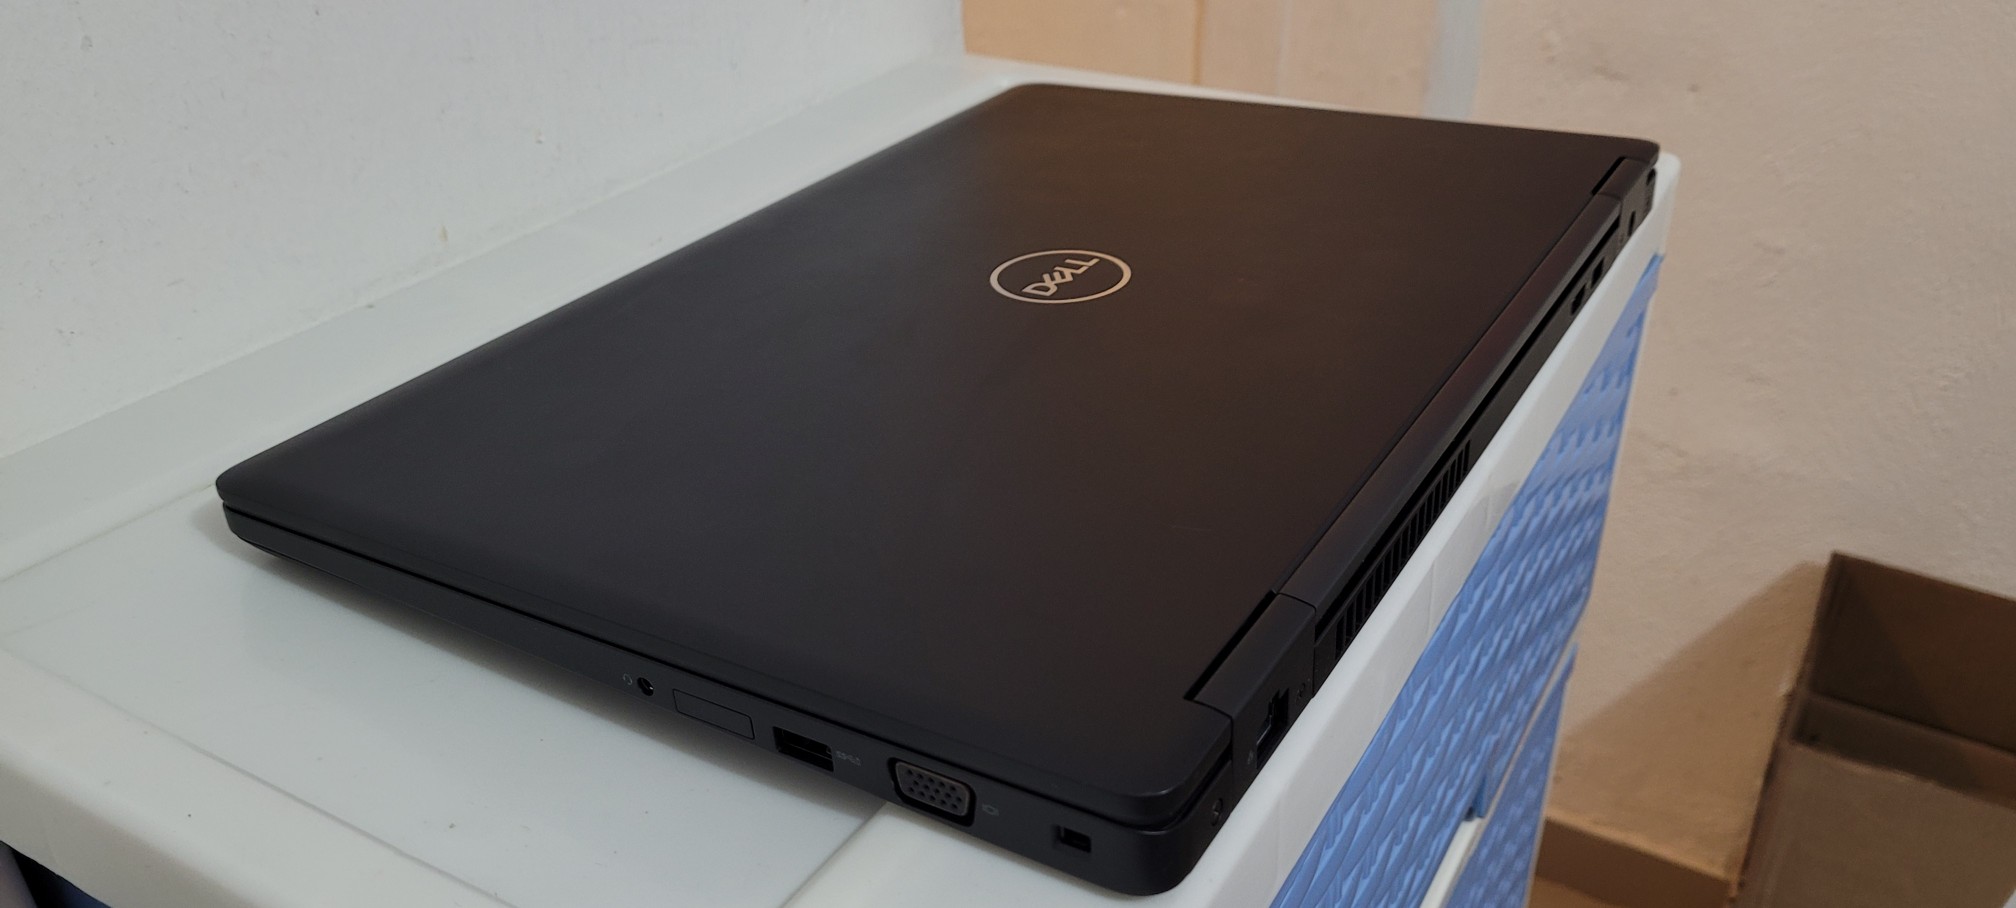 computadoras y laptops - Dell 5590 17 Pulg Core i7 8va Gen Ram 16gb ddr4 Disco 512gb Video 8gb Disponible 2